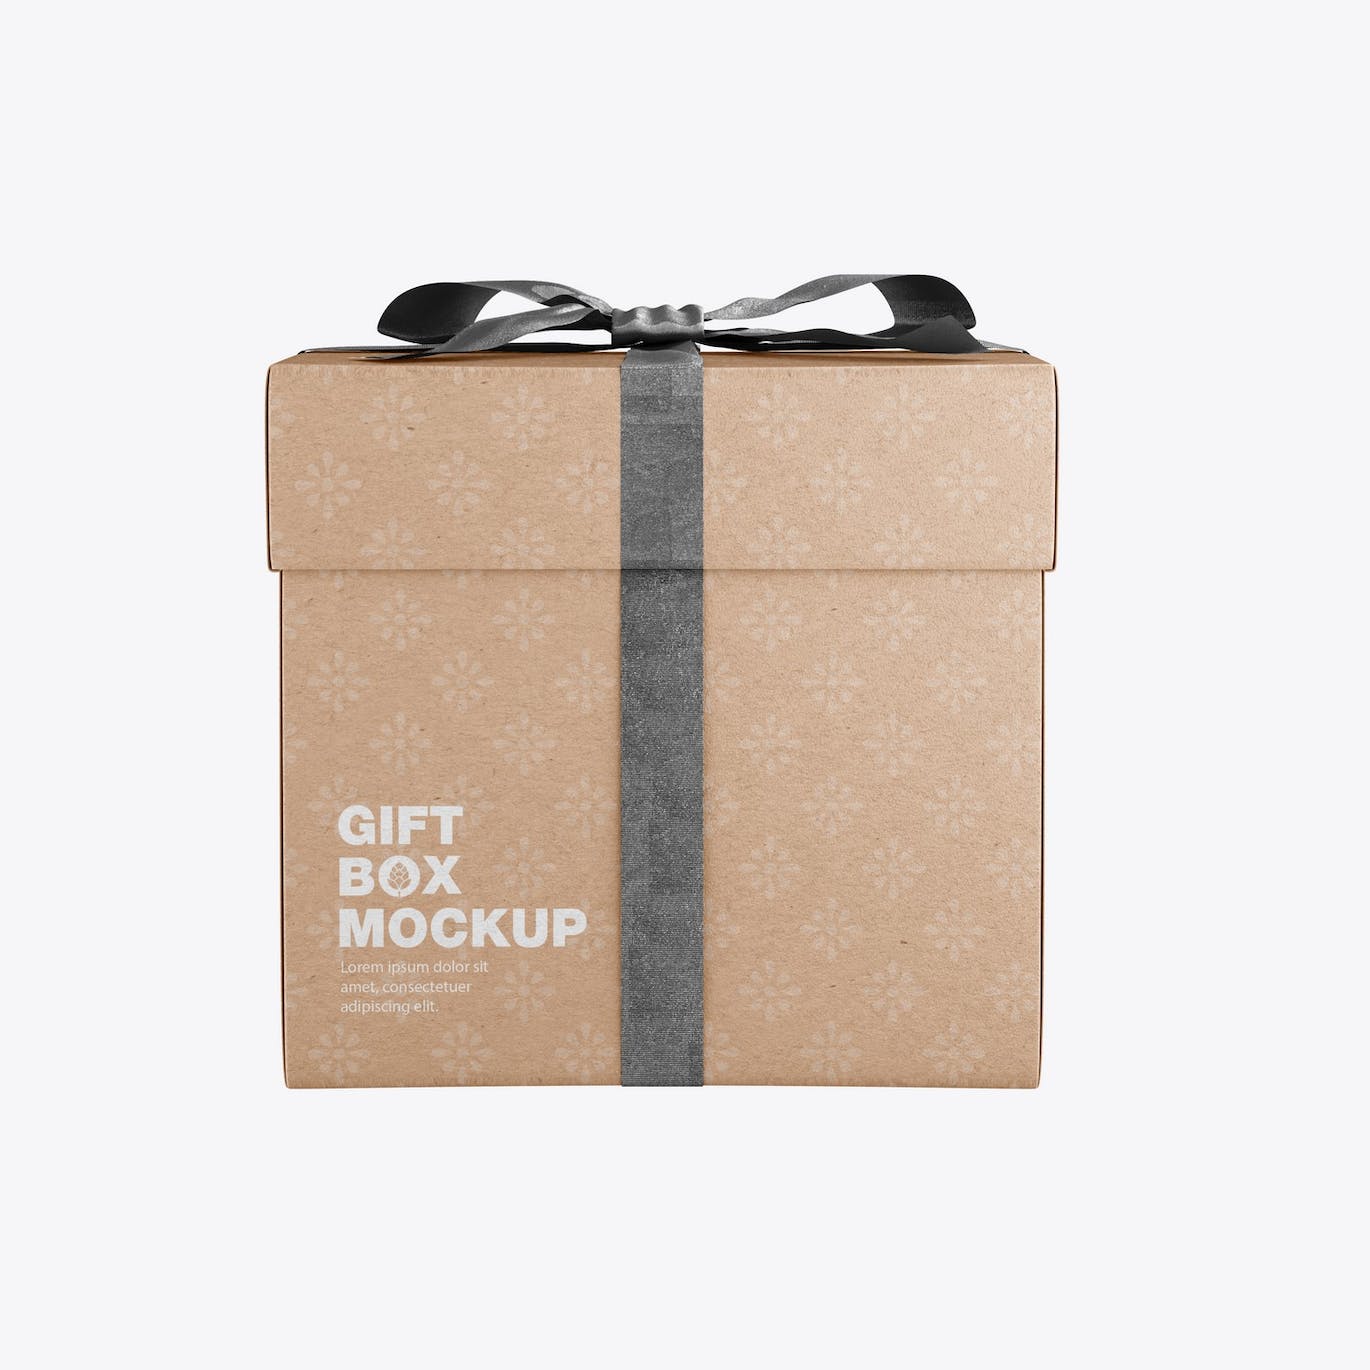 光泽蝴蝶结礼品盒设计样机 Set Glossy Gift Box Mockup 样机素材 第4张